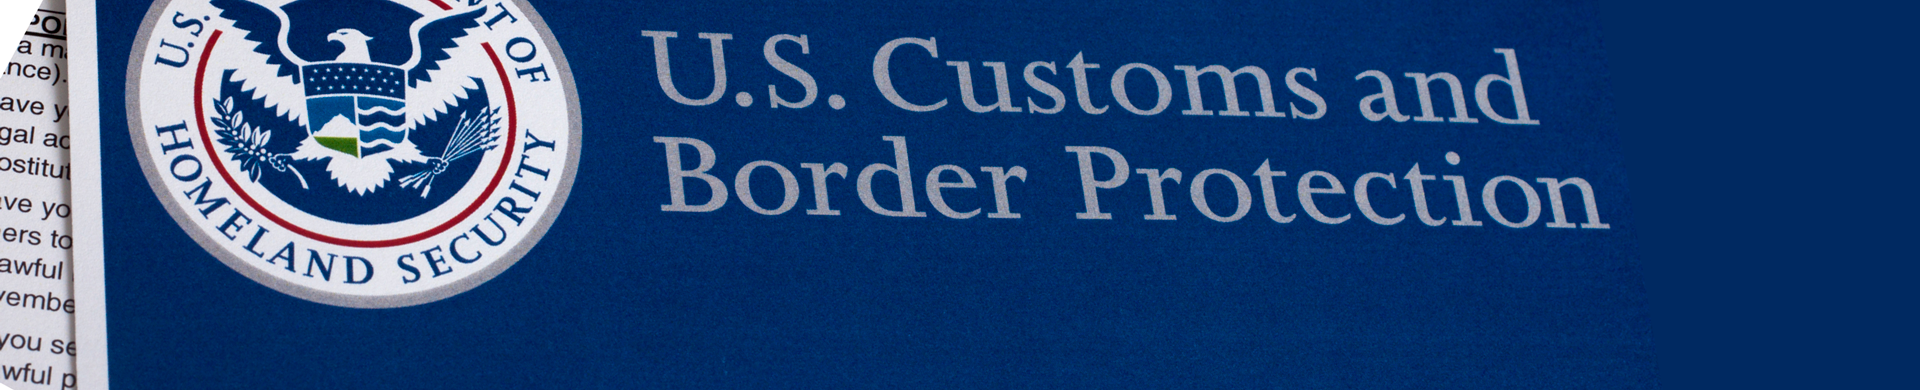 banner douanes américaines